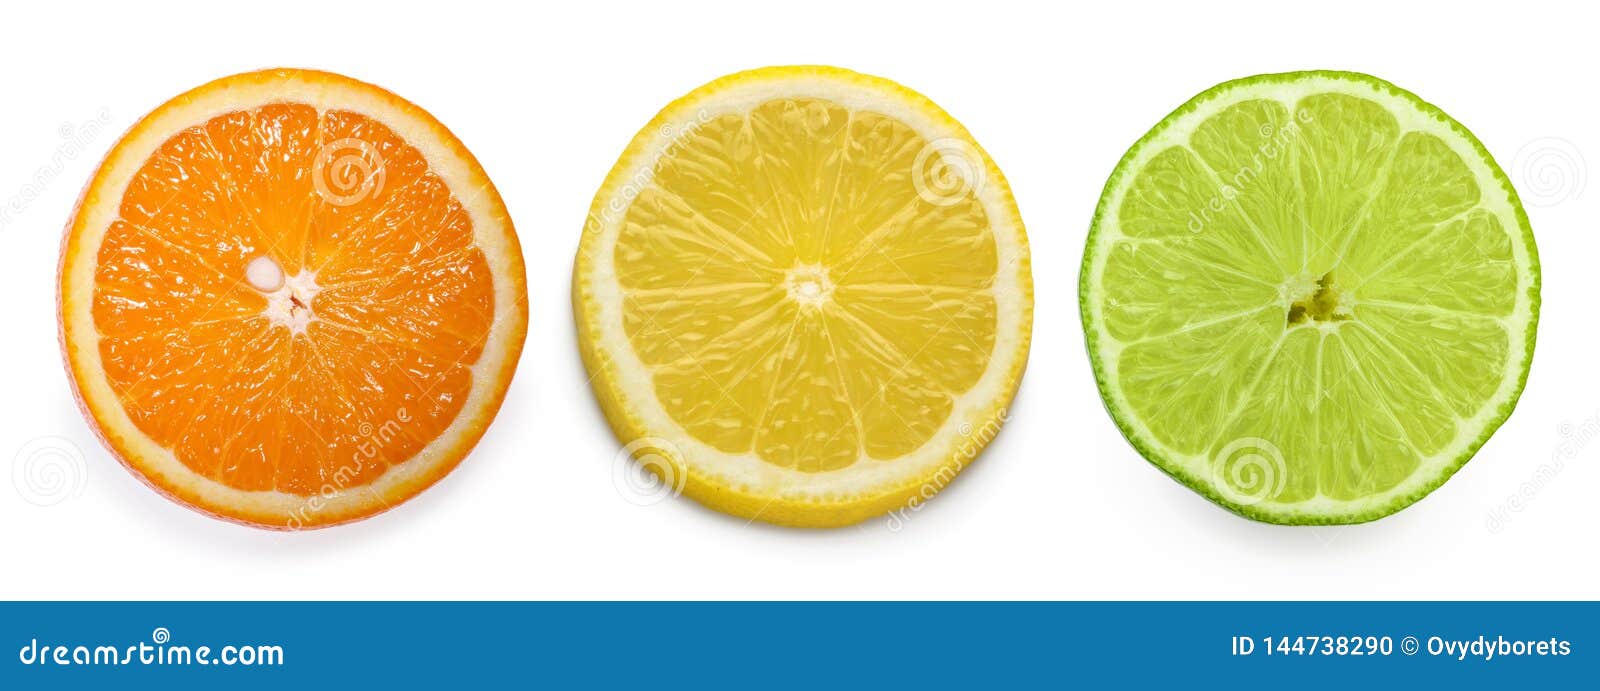 citrus slice, orange, lemon, lime,  on white background